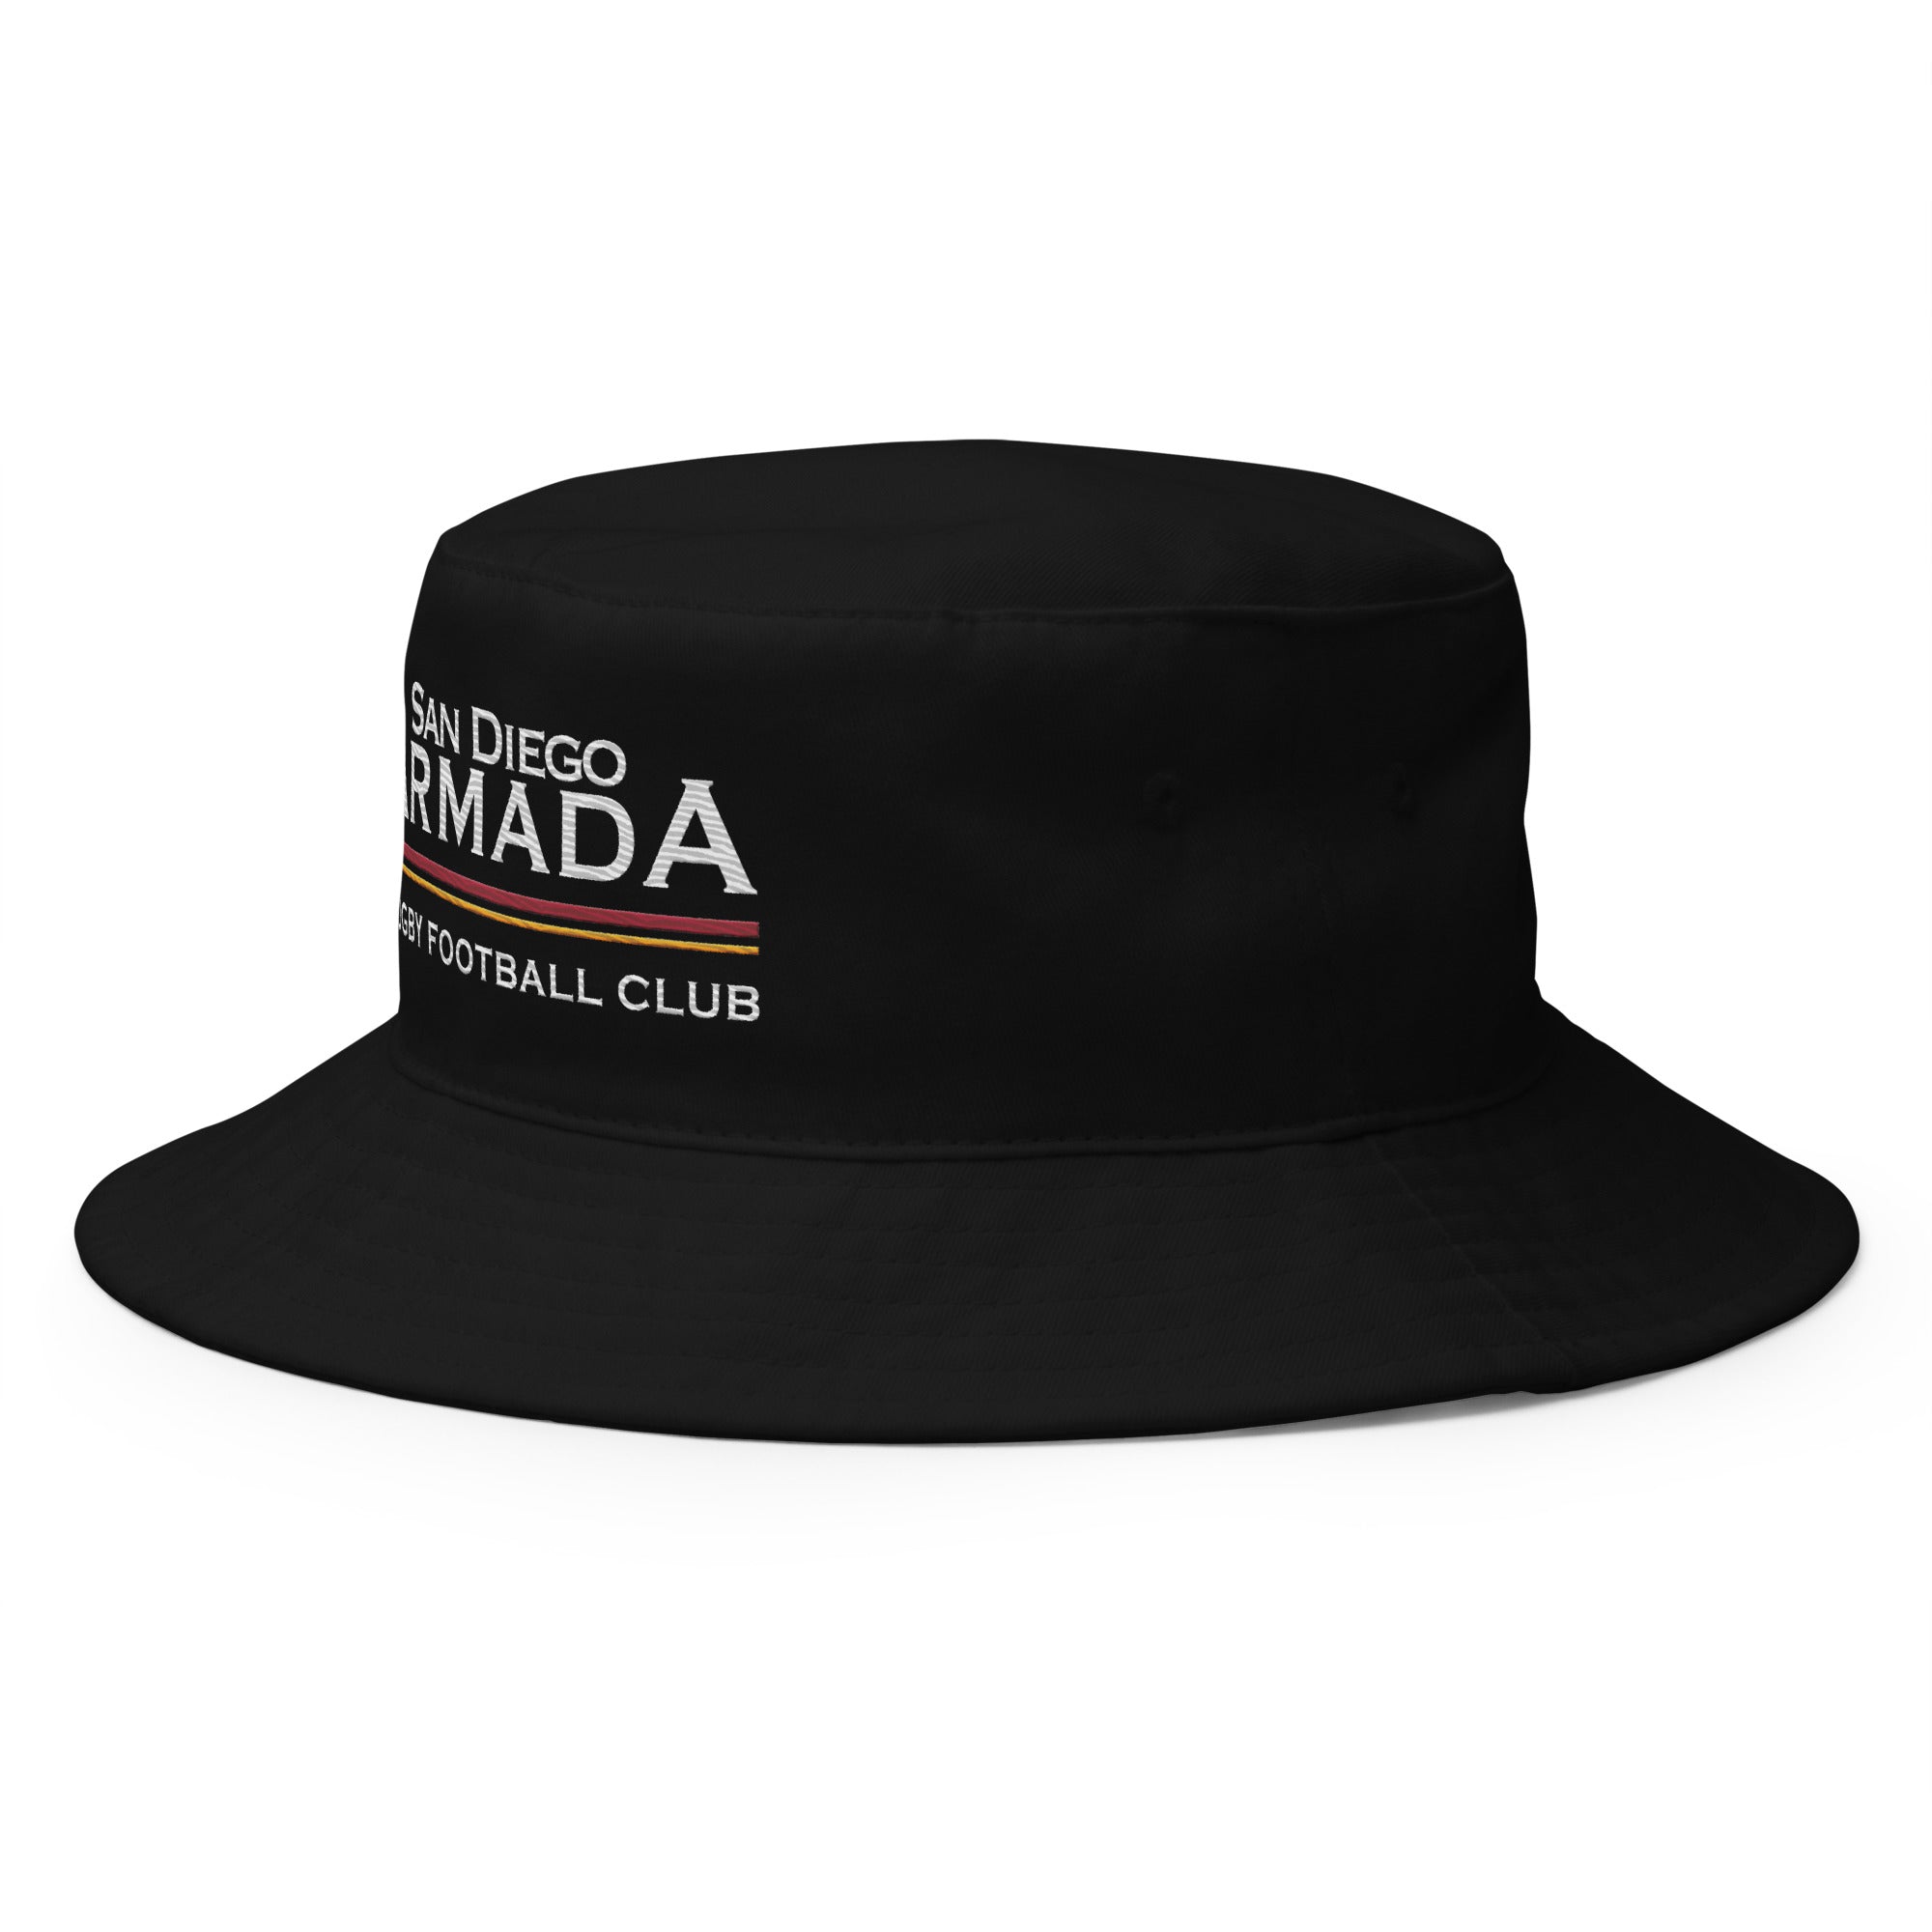 Rugby Imports San Diego Armada Bucket Hat